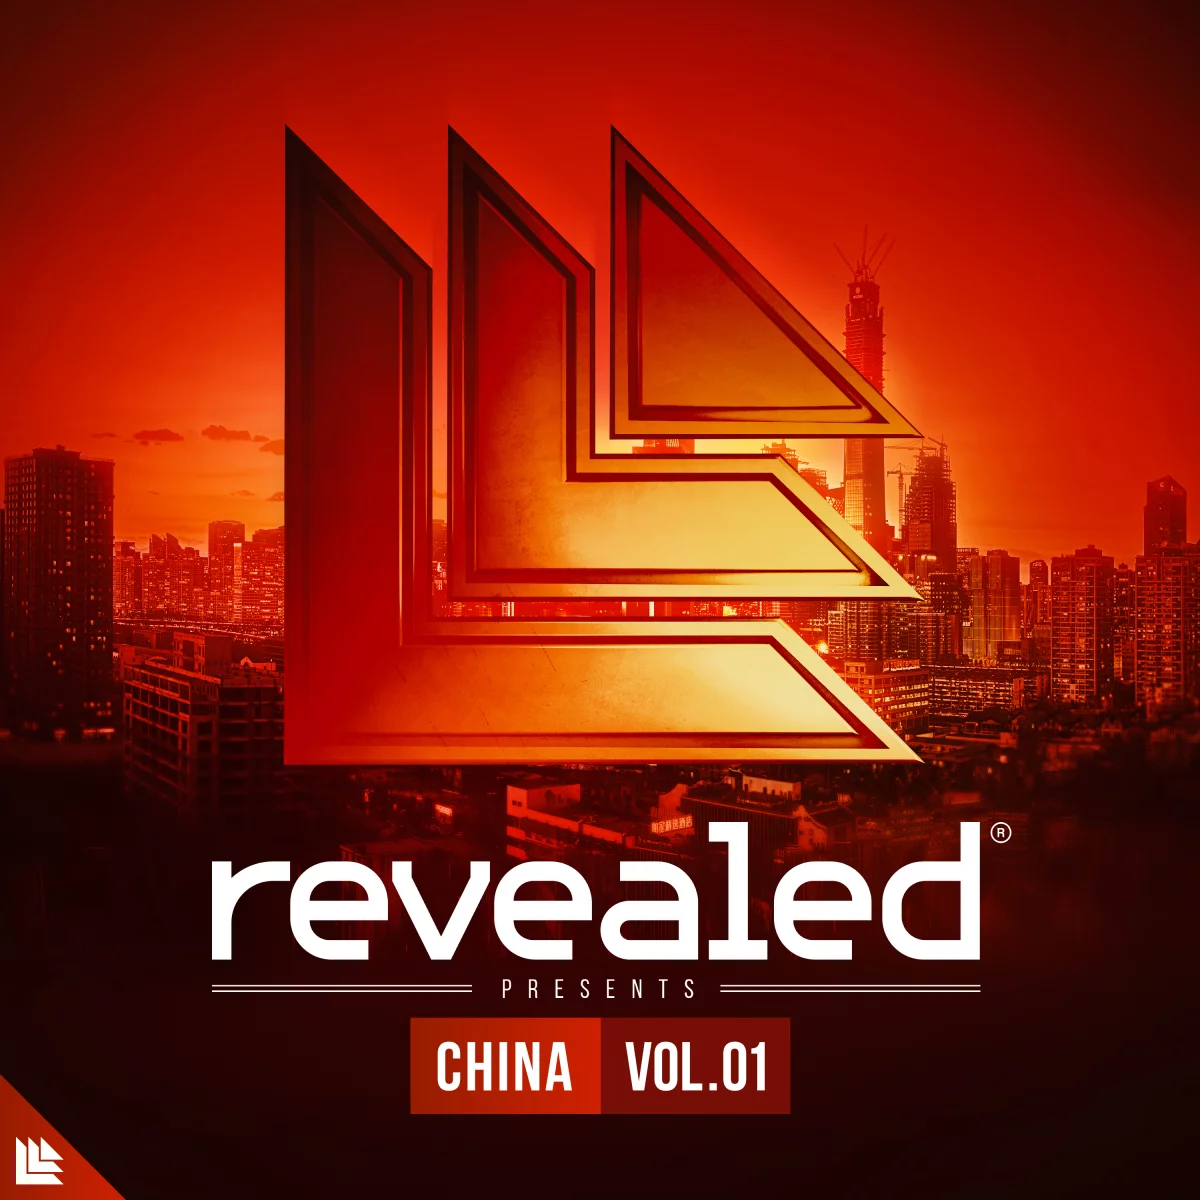 [LIGHT] Revealed China Vol. 1 - revealedrec⁠ 